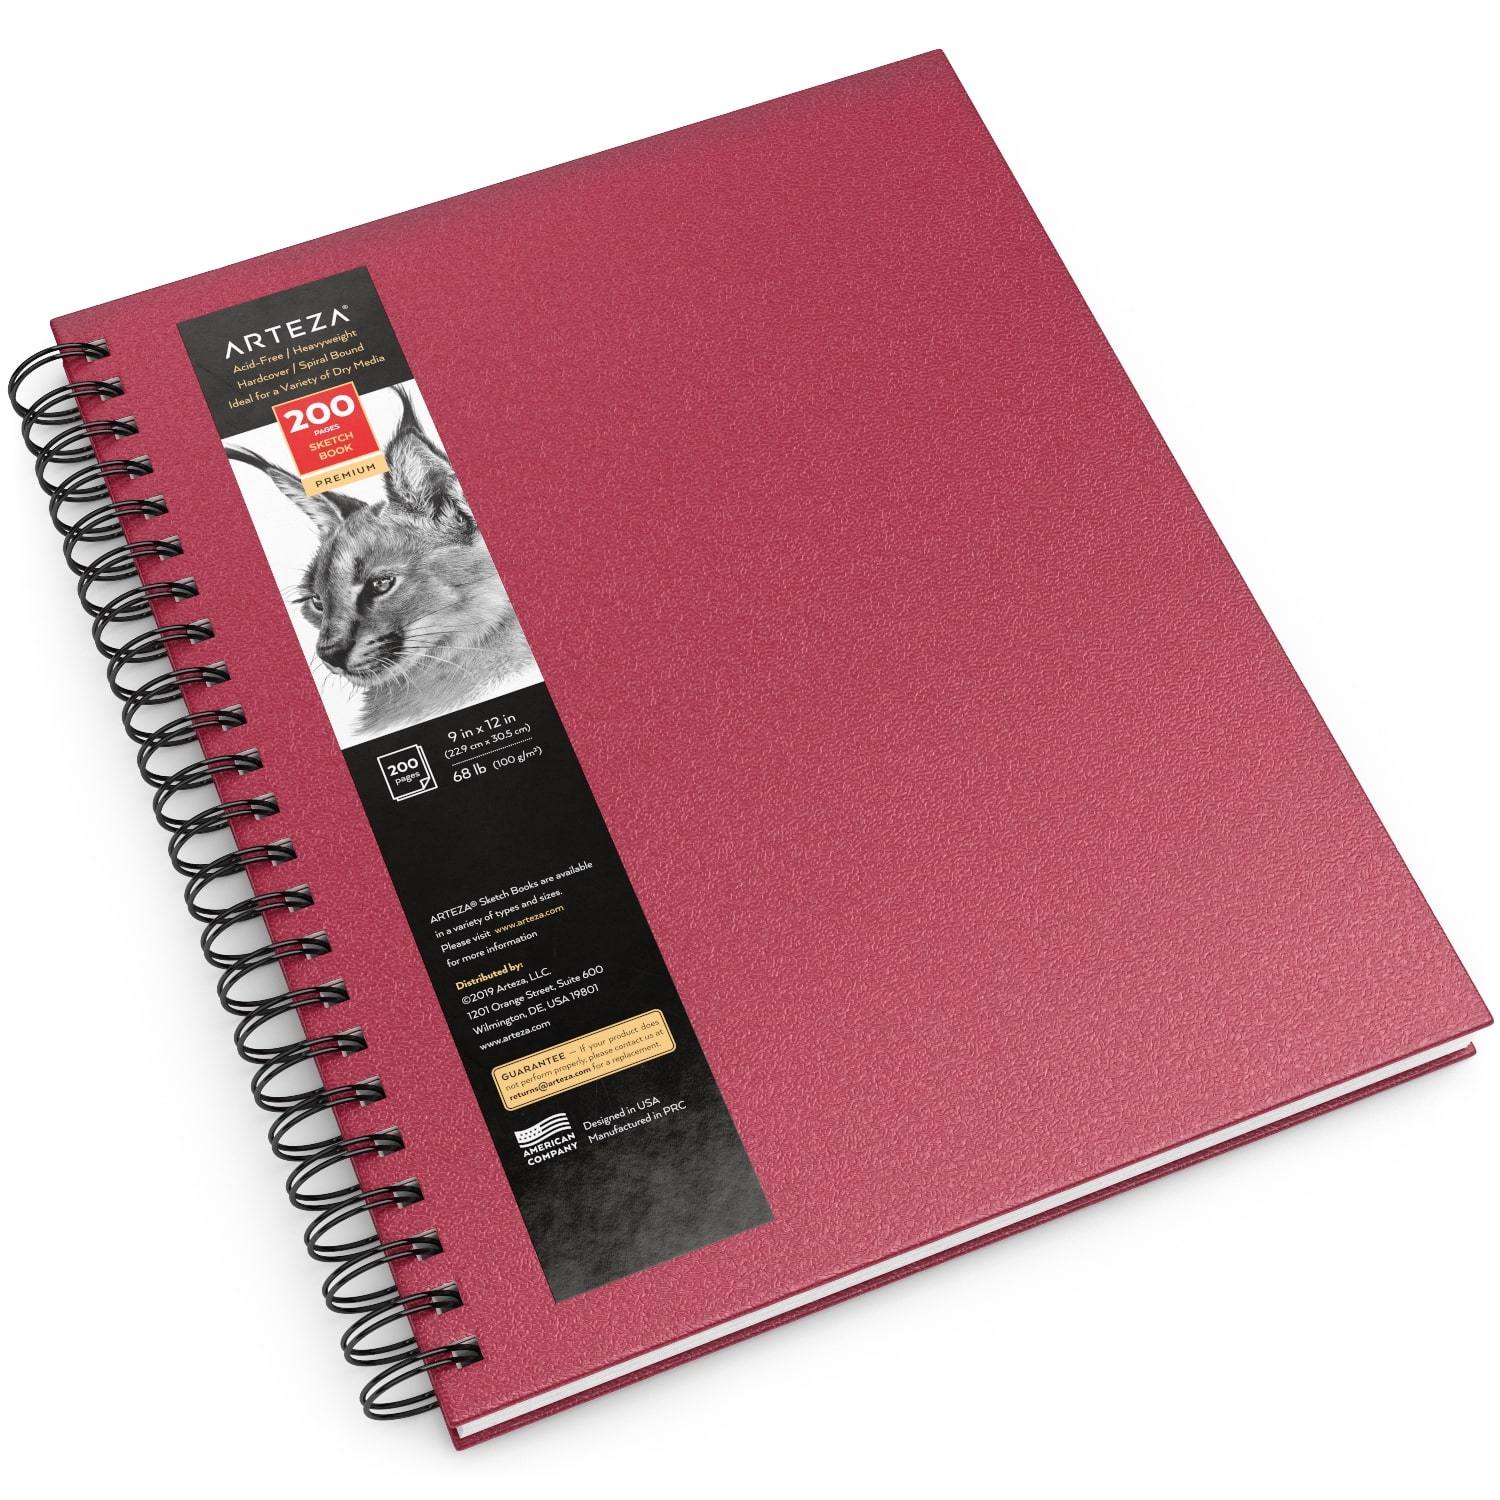 Arteza Sketchbook, Spiral-Bound Hardcover, Pink, 9x12, 200 Pages